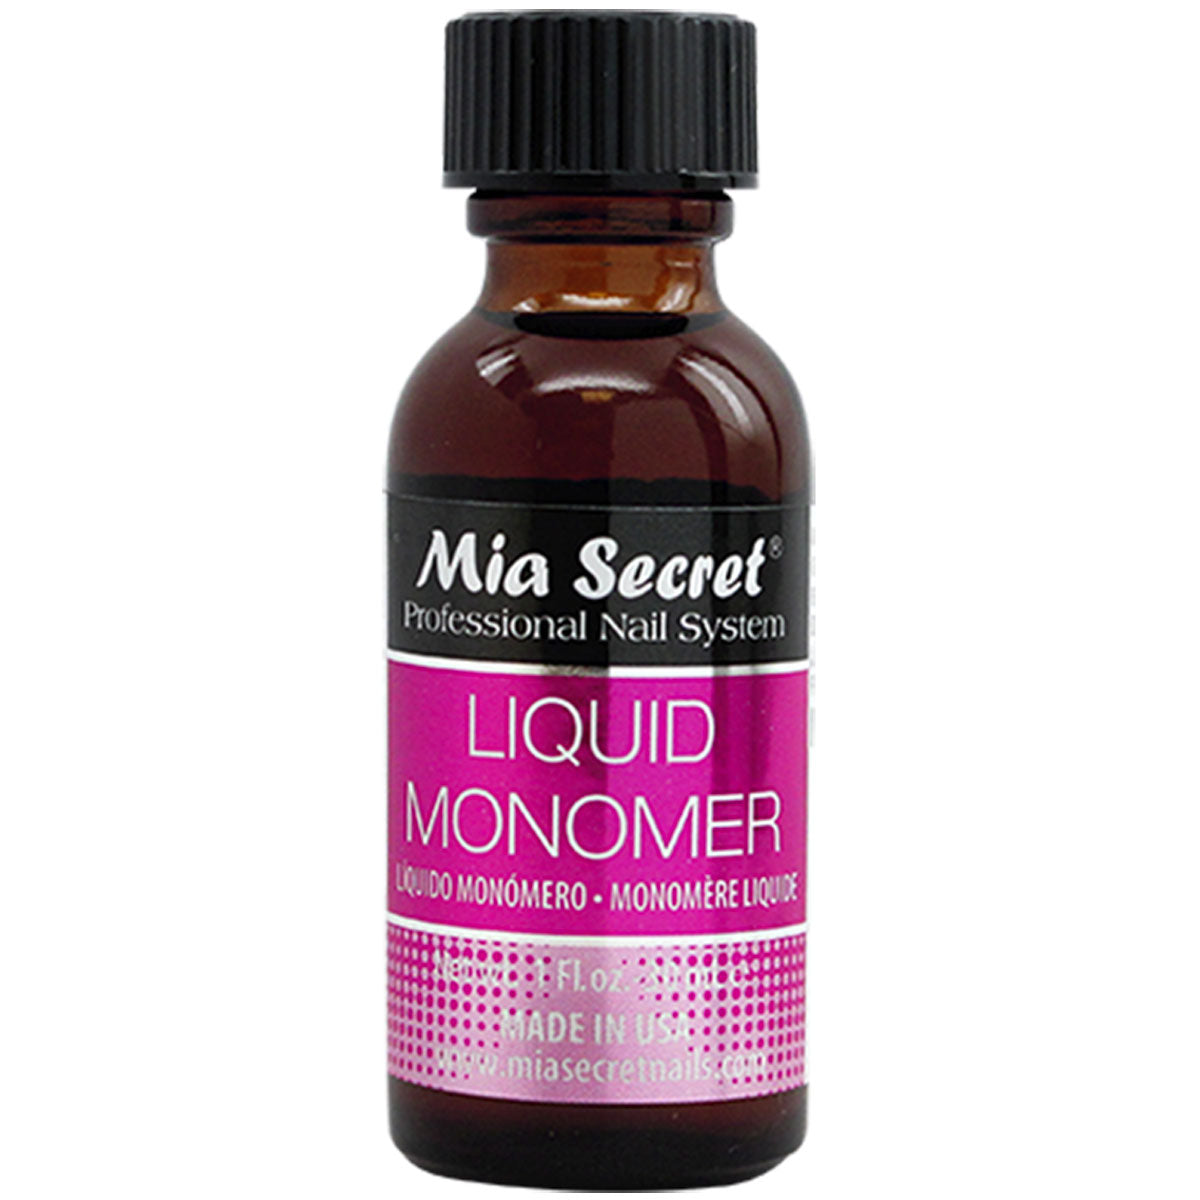 Liquido Acrilico Mia Secret 30ml monomero en Beauty Supply